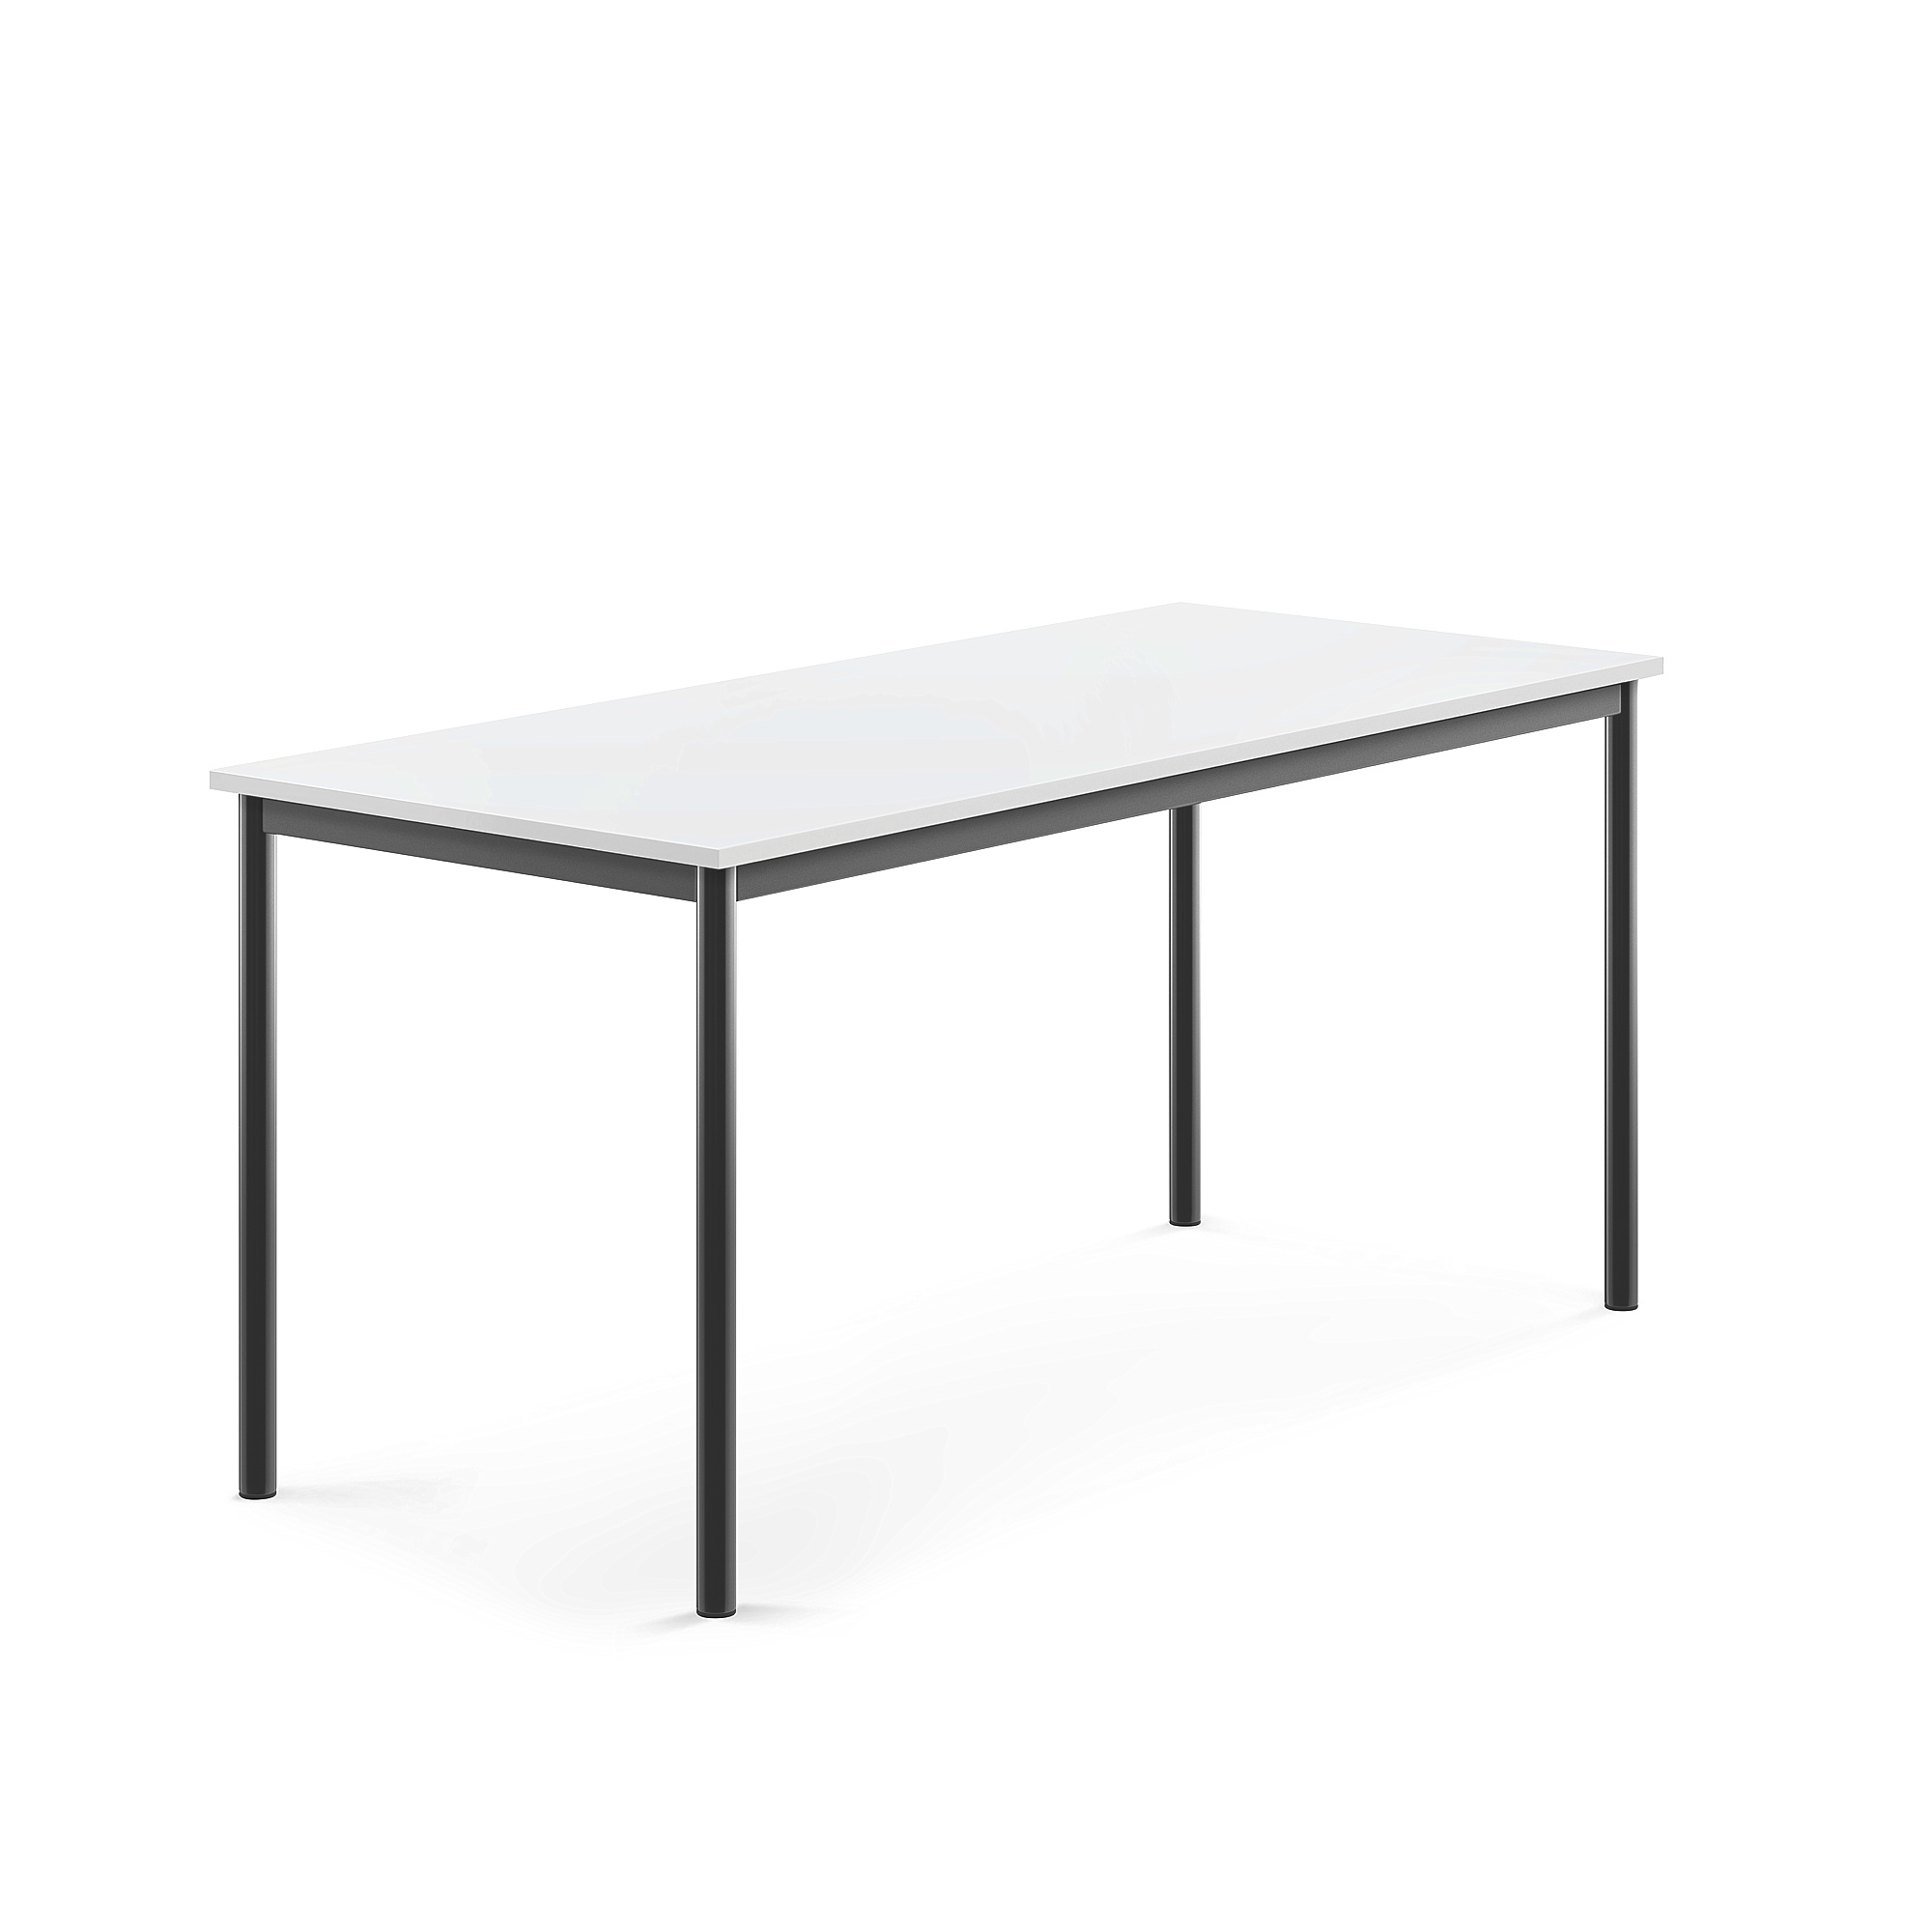 Stůl BORÅS, 1600x700x720 mm, antracitově šedé nohy, HPL deska, bílá